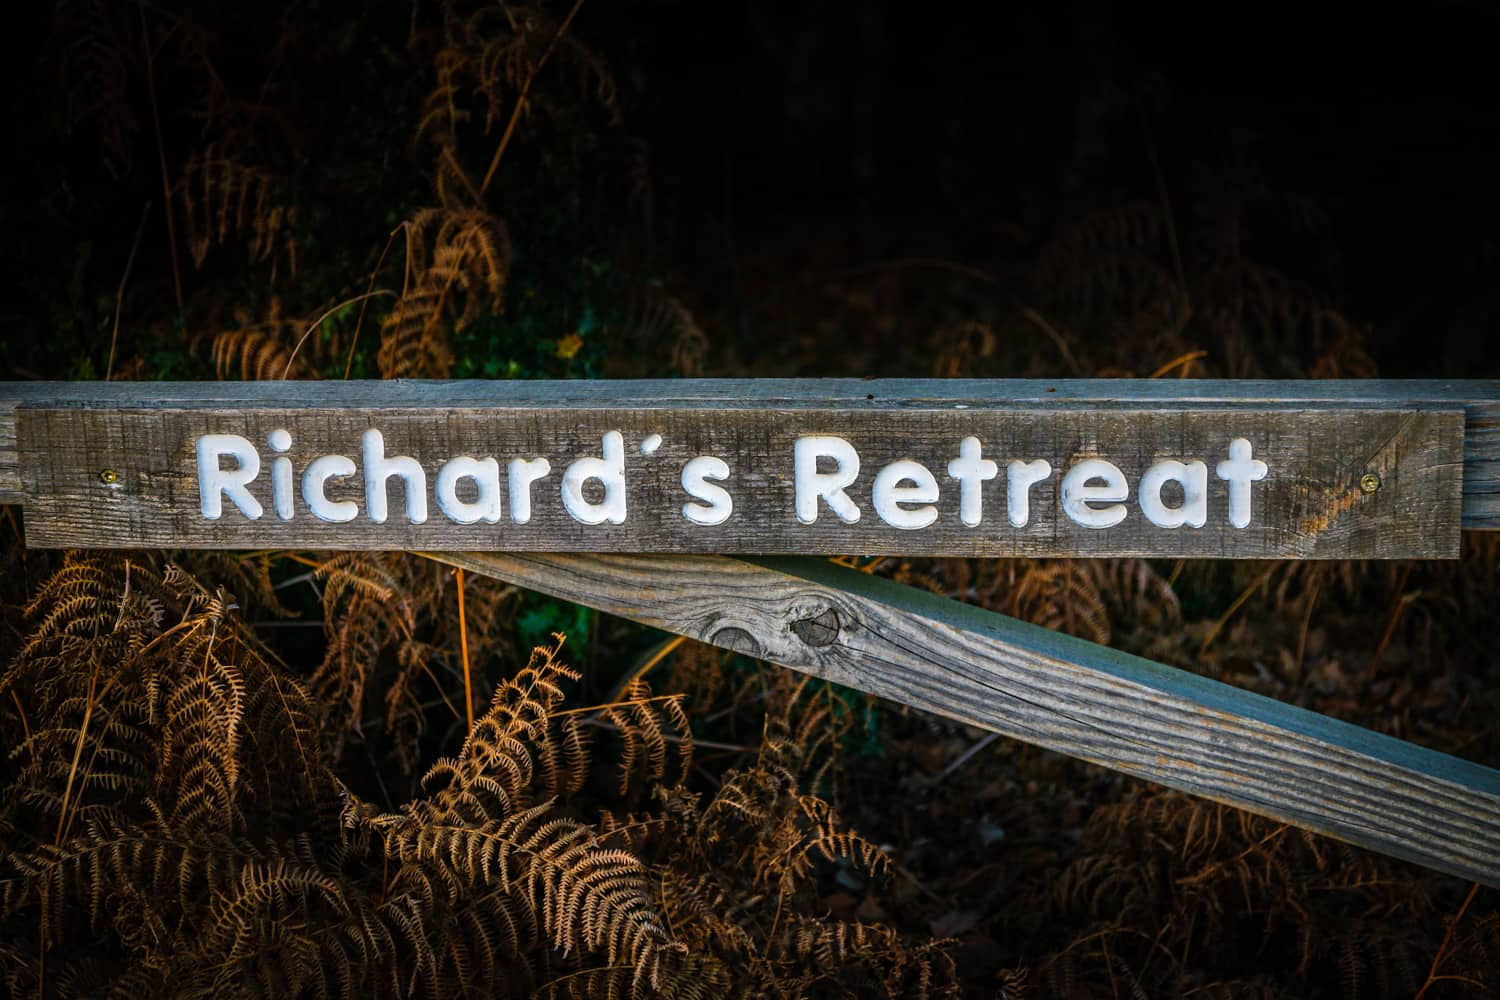  Richards Retreat by Rick McEvoy Hampshire Photographer   